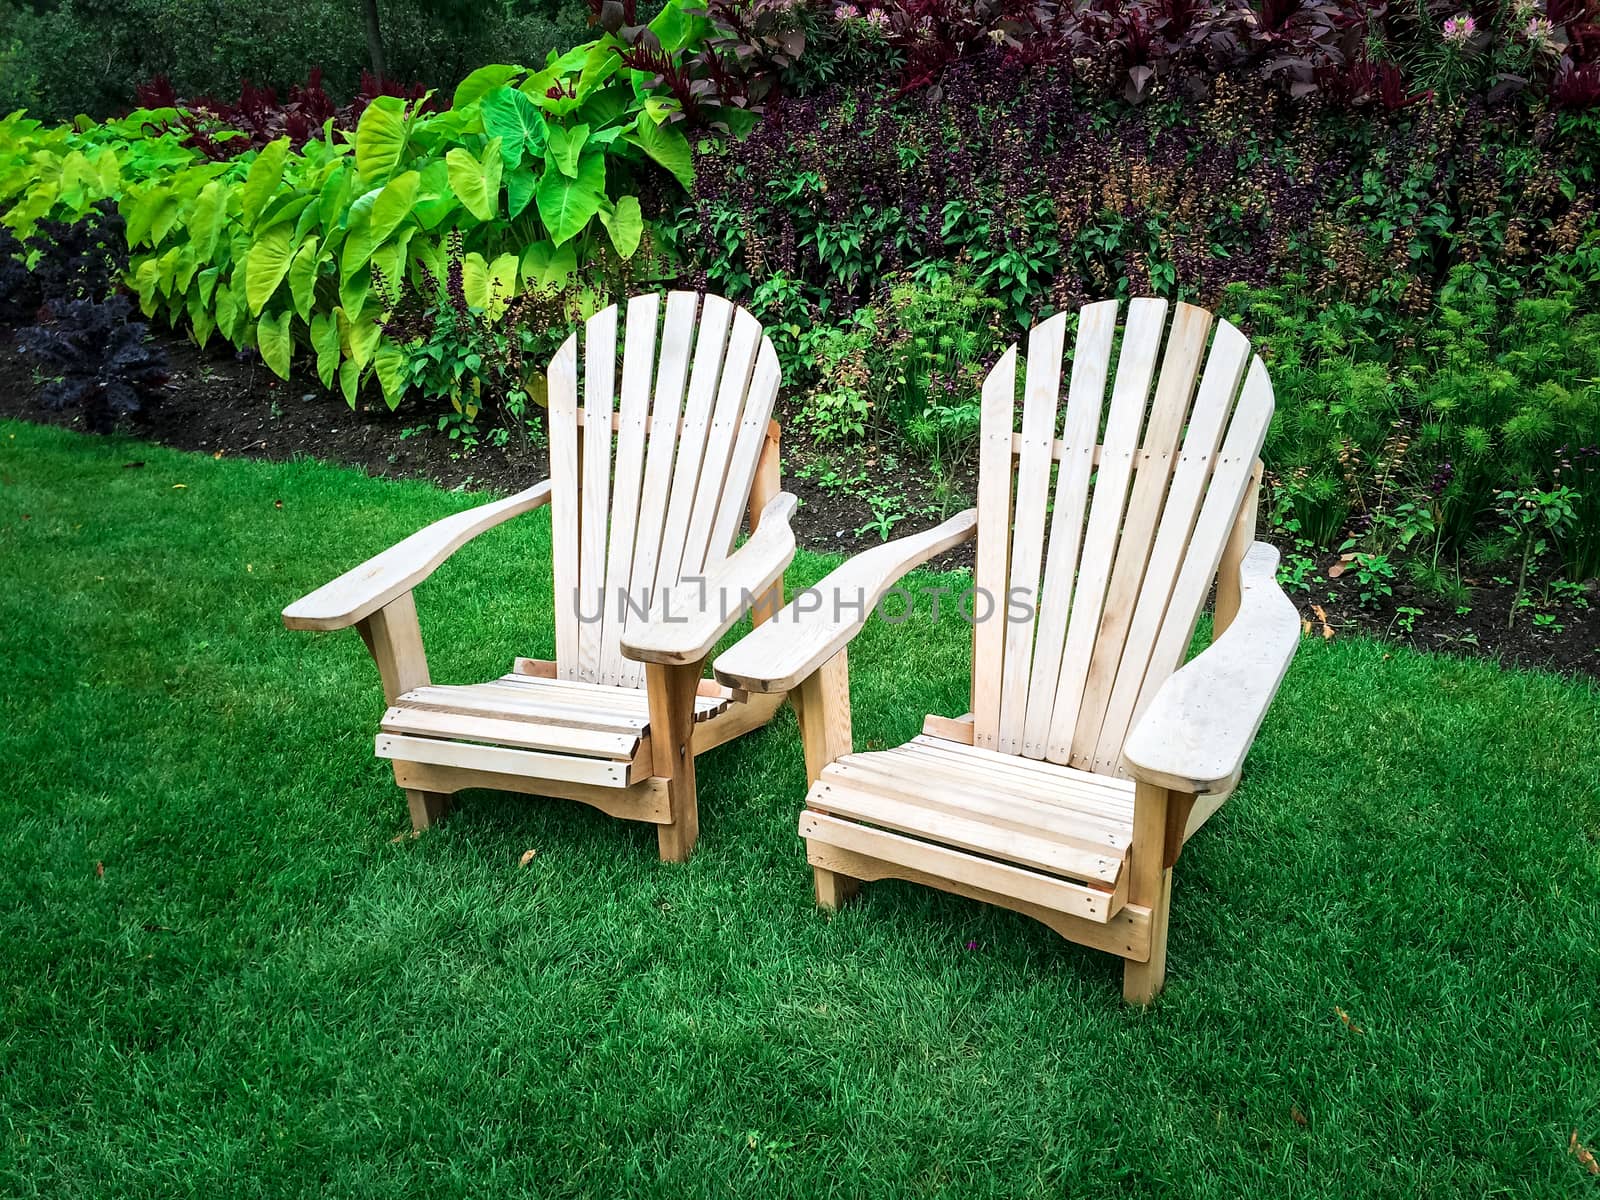 Wooden chairs on a green lawn. Summer garden.